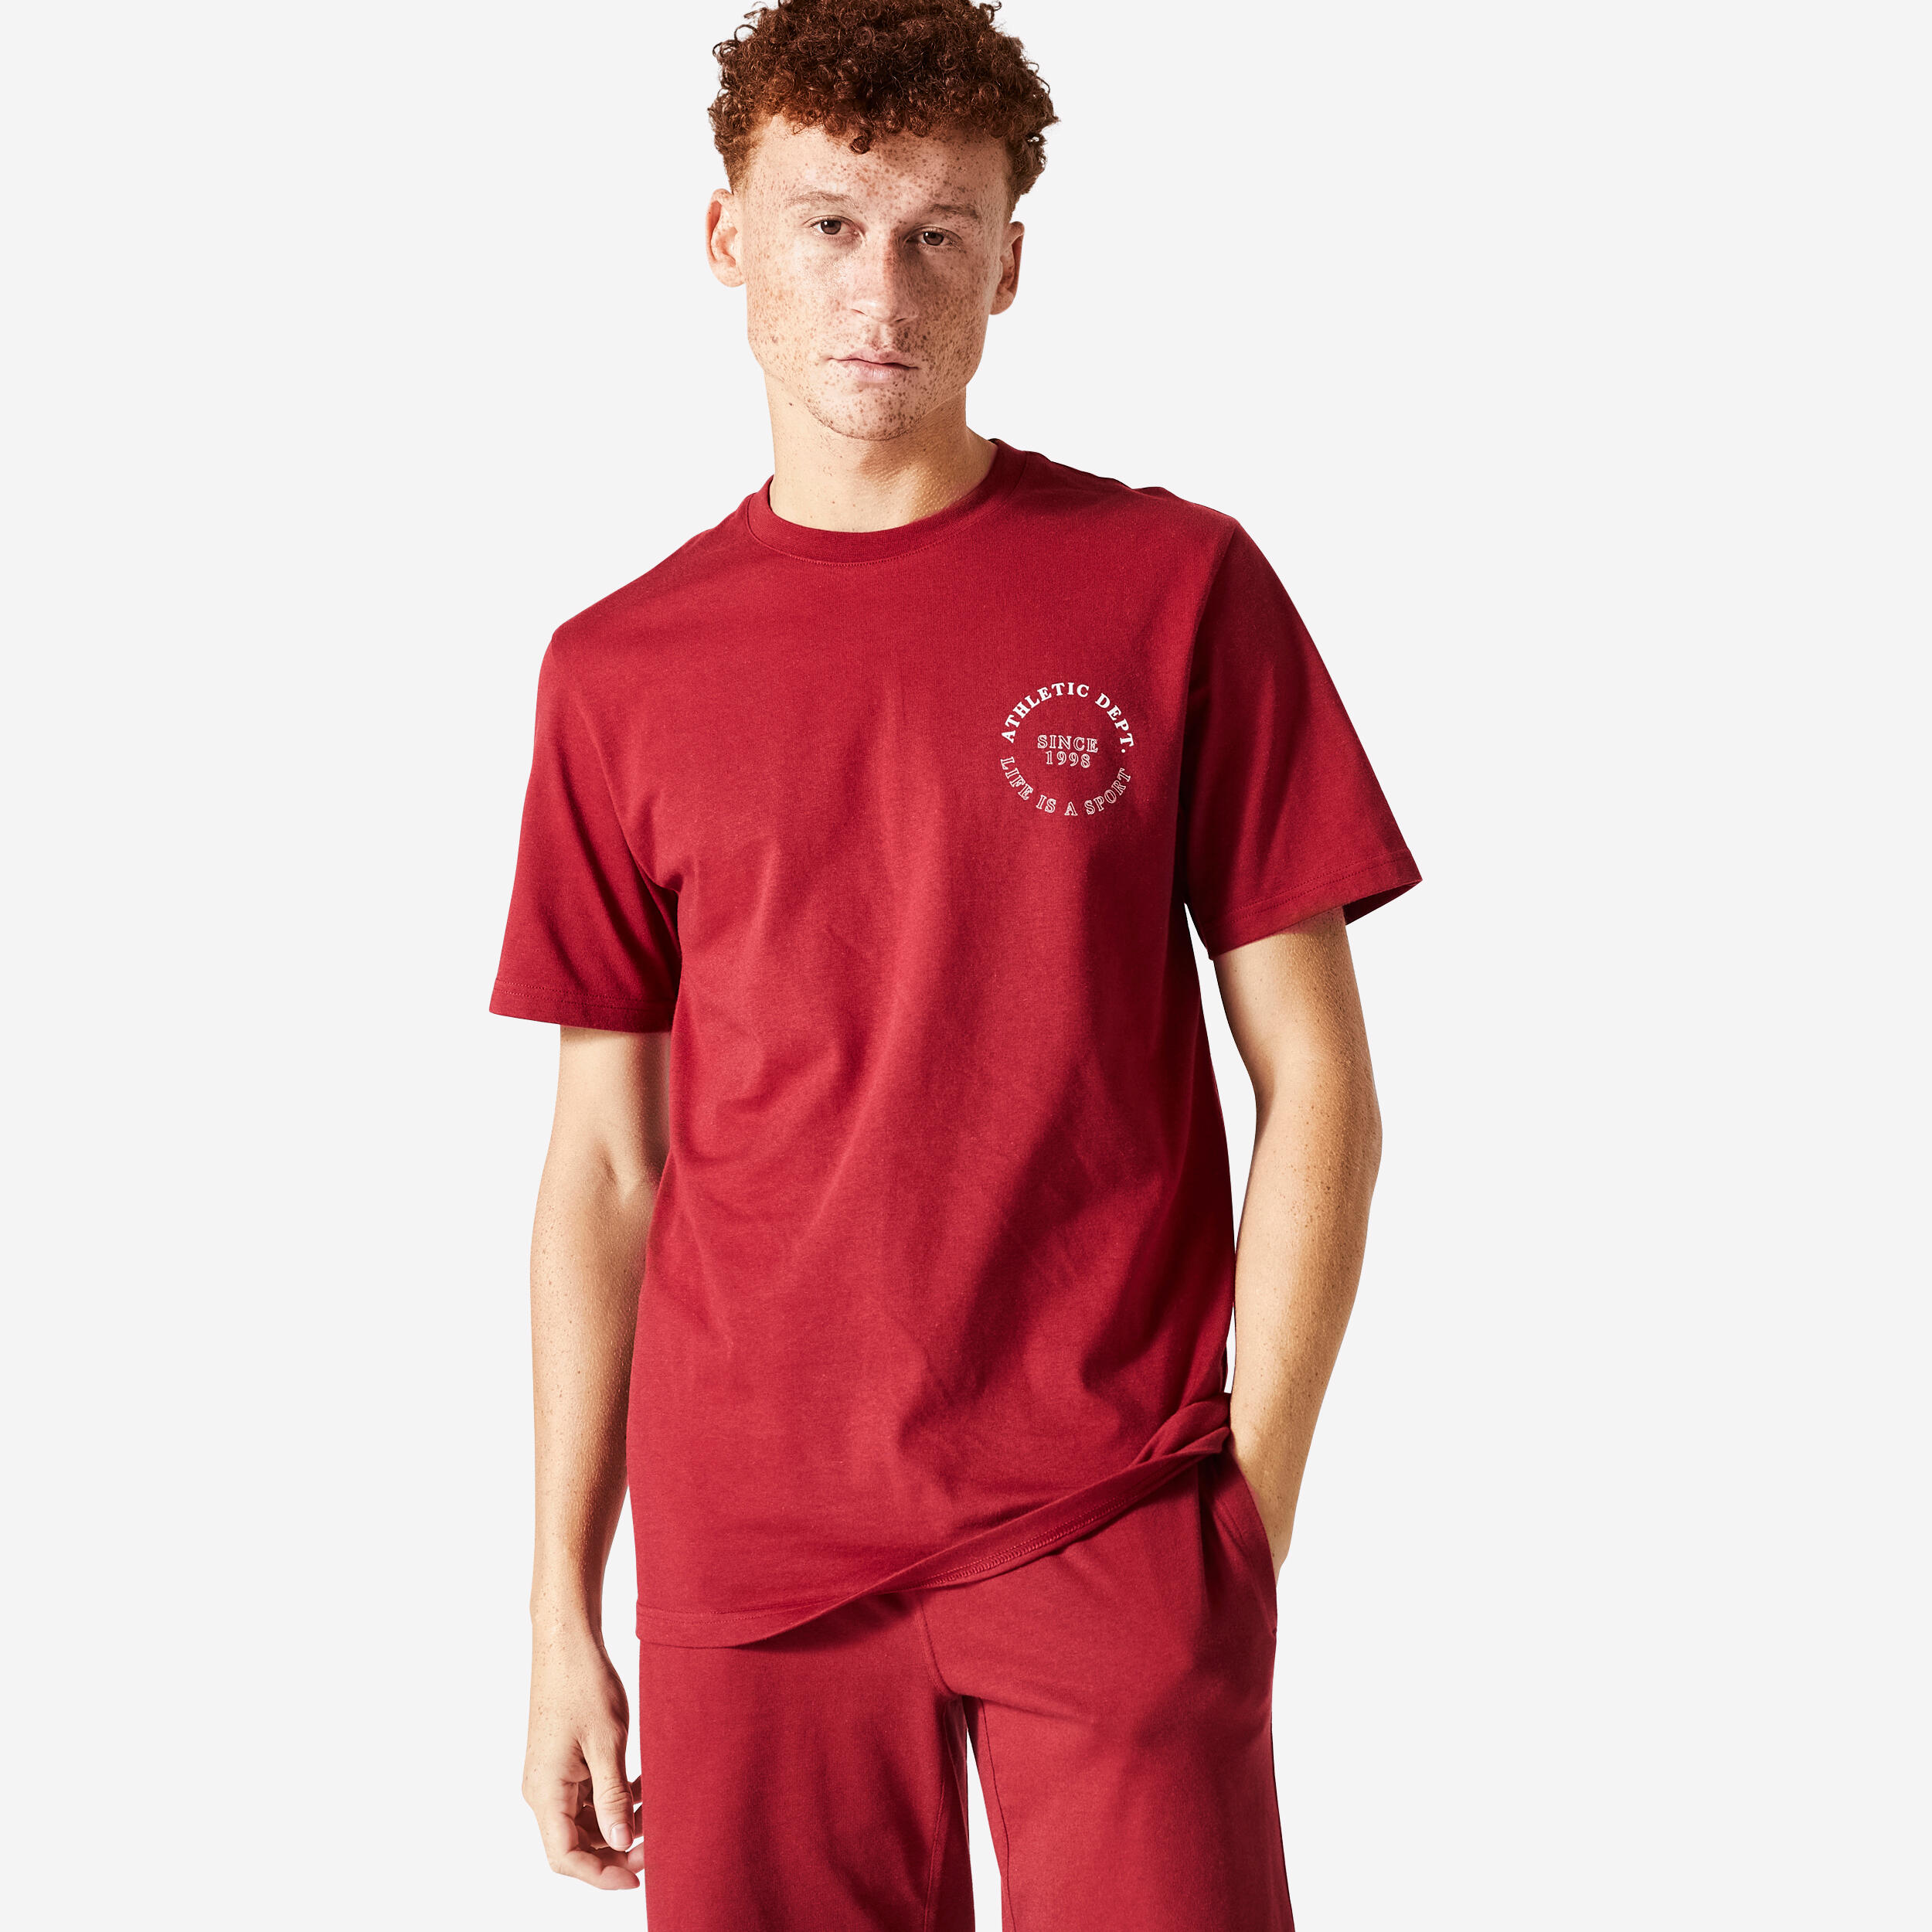 DOMYOS Men's Fitness T-Shirt 500 Essentials - Burgundy Red Print